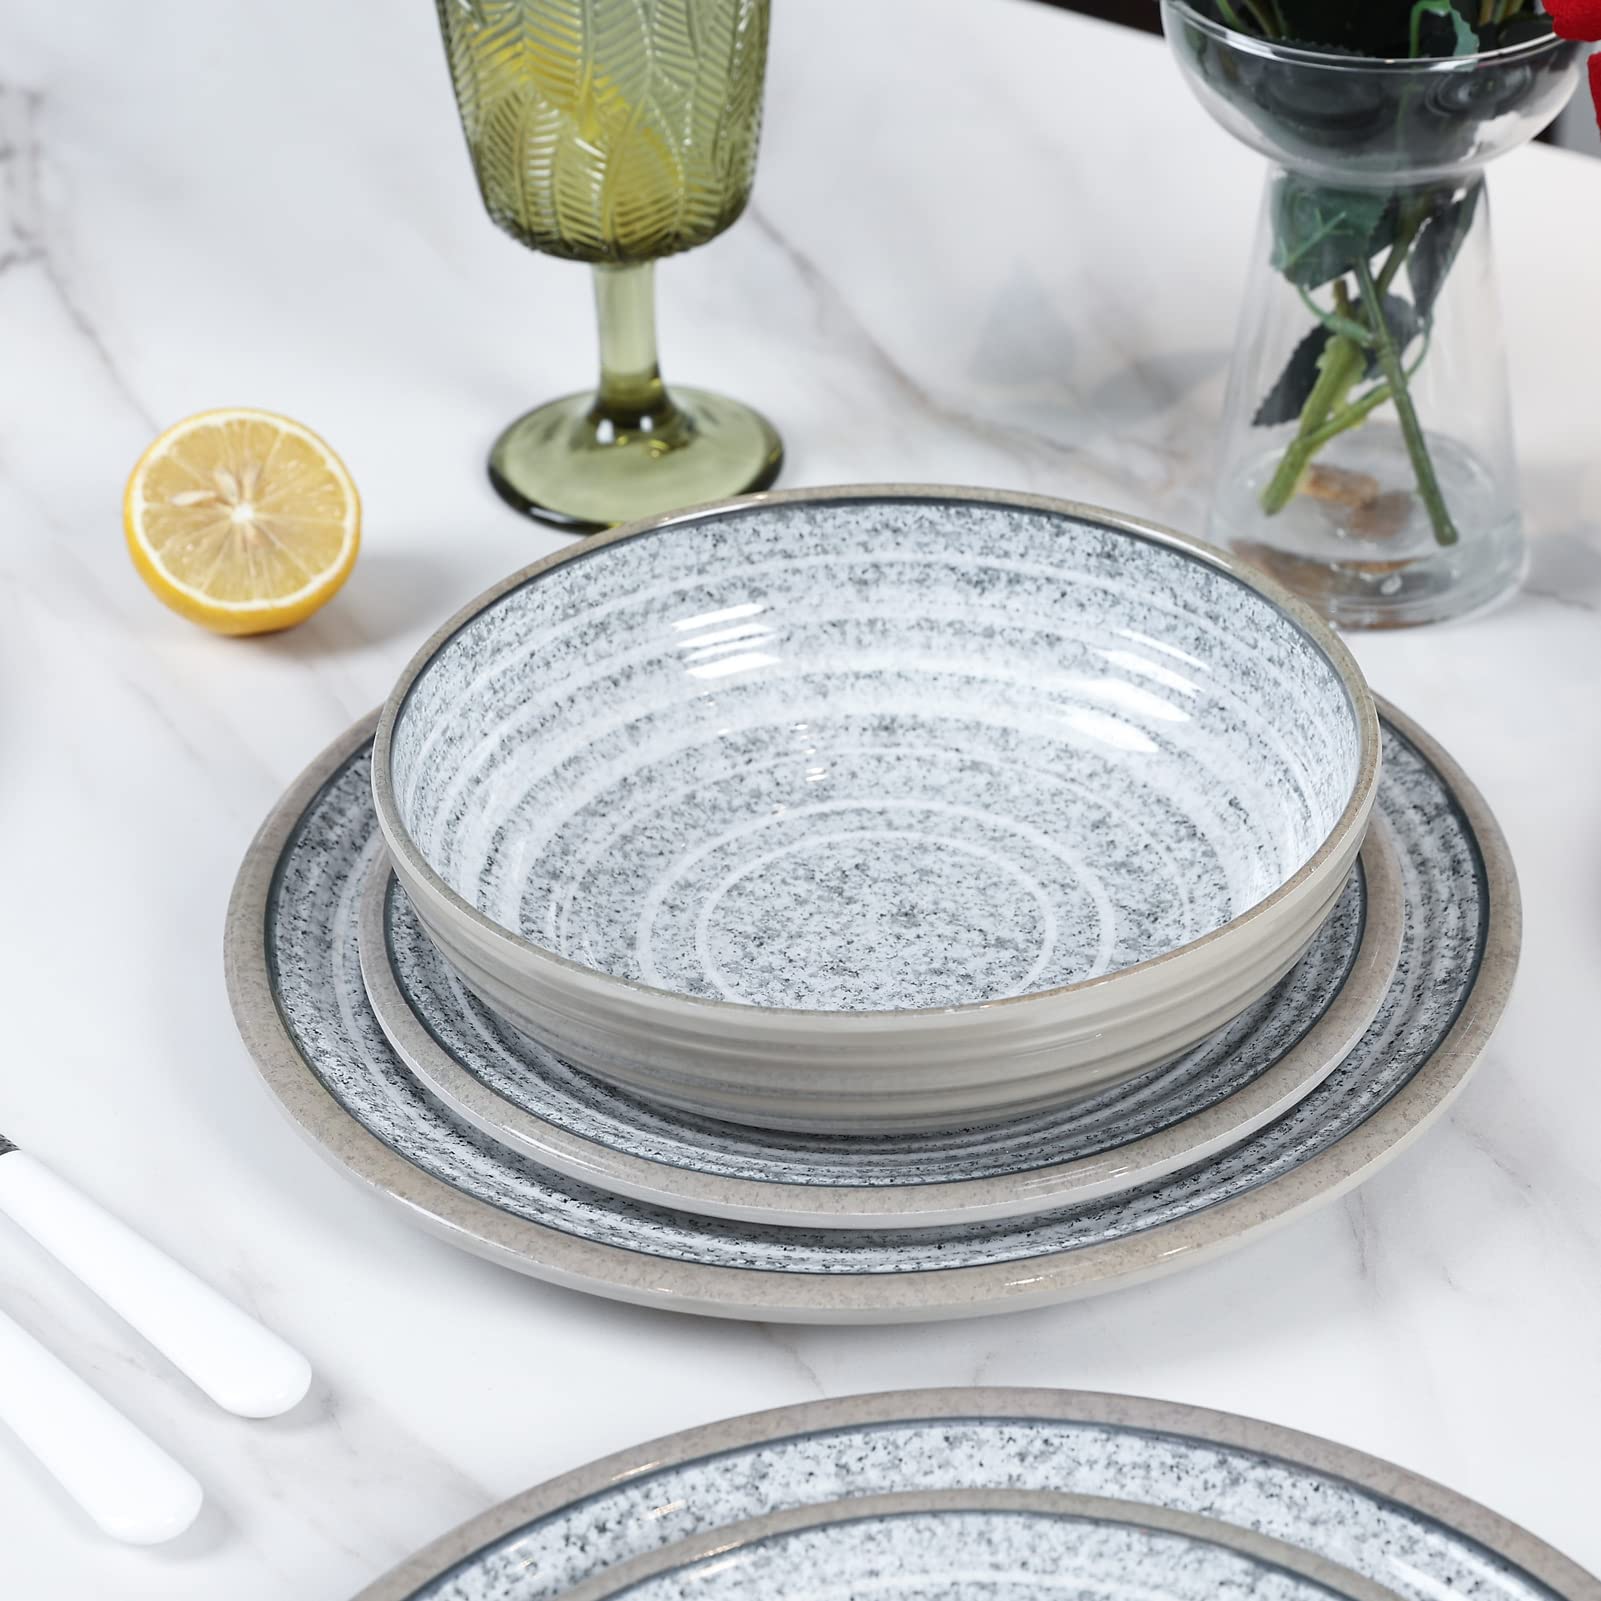 Gofunfun Melamine Dinnerware Sets 12 PCS - Service for 4 Plates & Bowls Sets Dishwasher Top-Shelf Safe, BPA Free Dinner Dishes Set for Everyday Use-Granite Pattern Gray